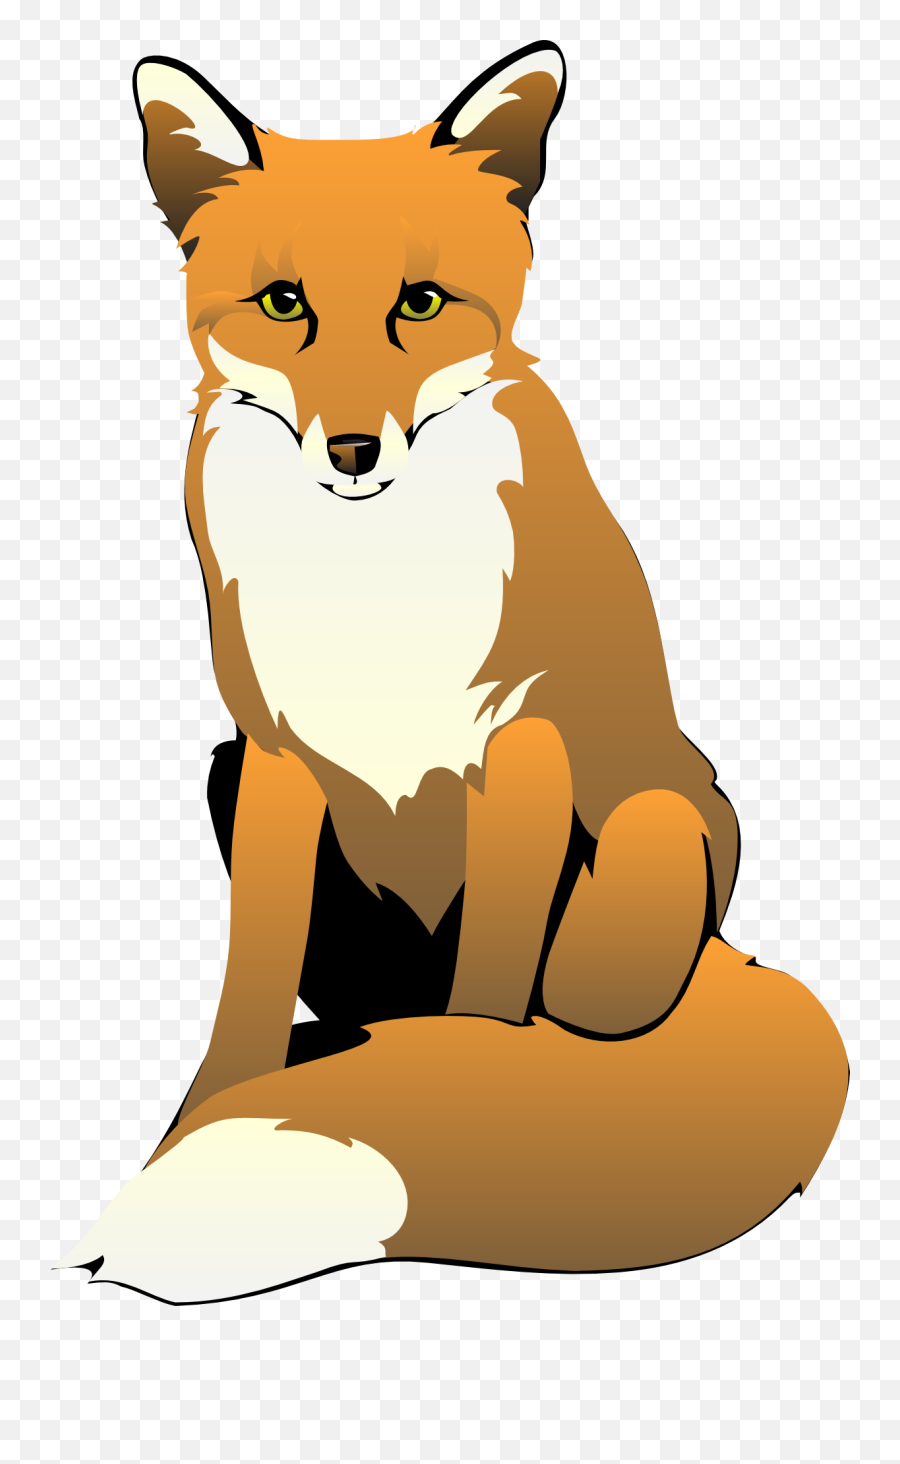 Fox Free To Use Cliparts - Clipartix Fox Clipart Emoji,Fox Emojis Transparent Background